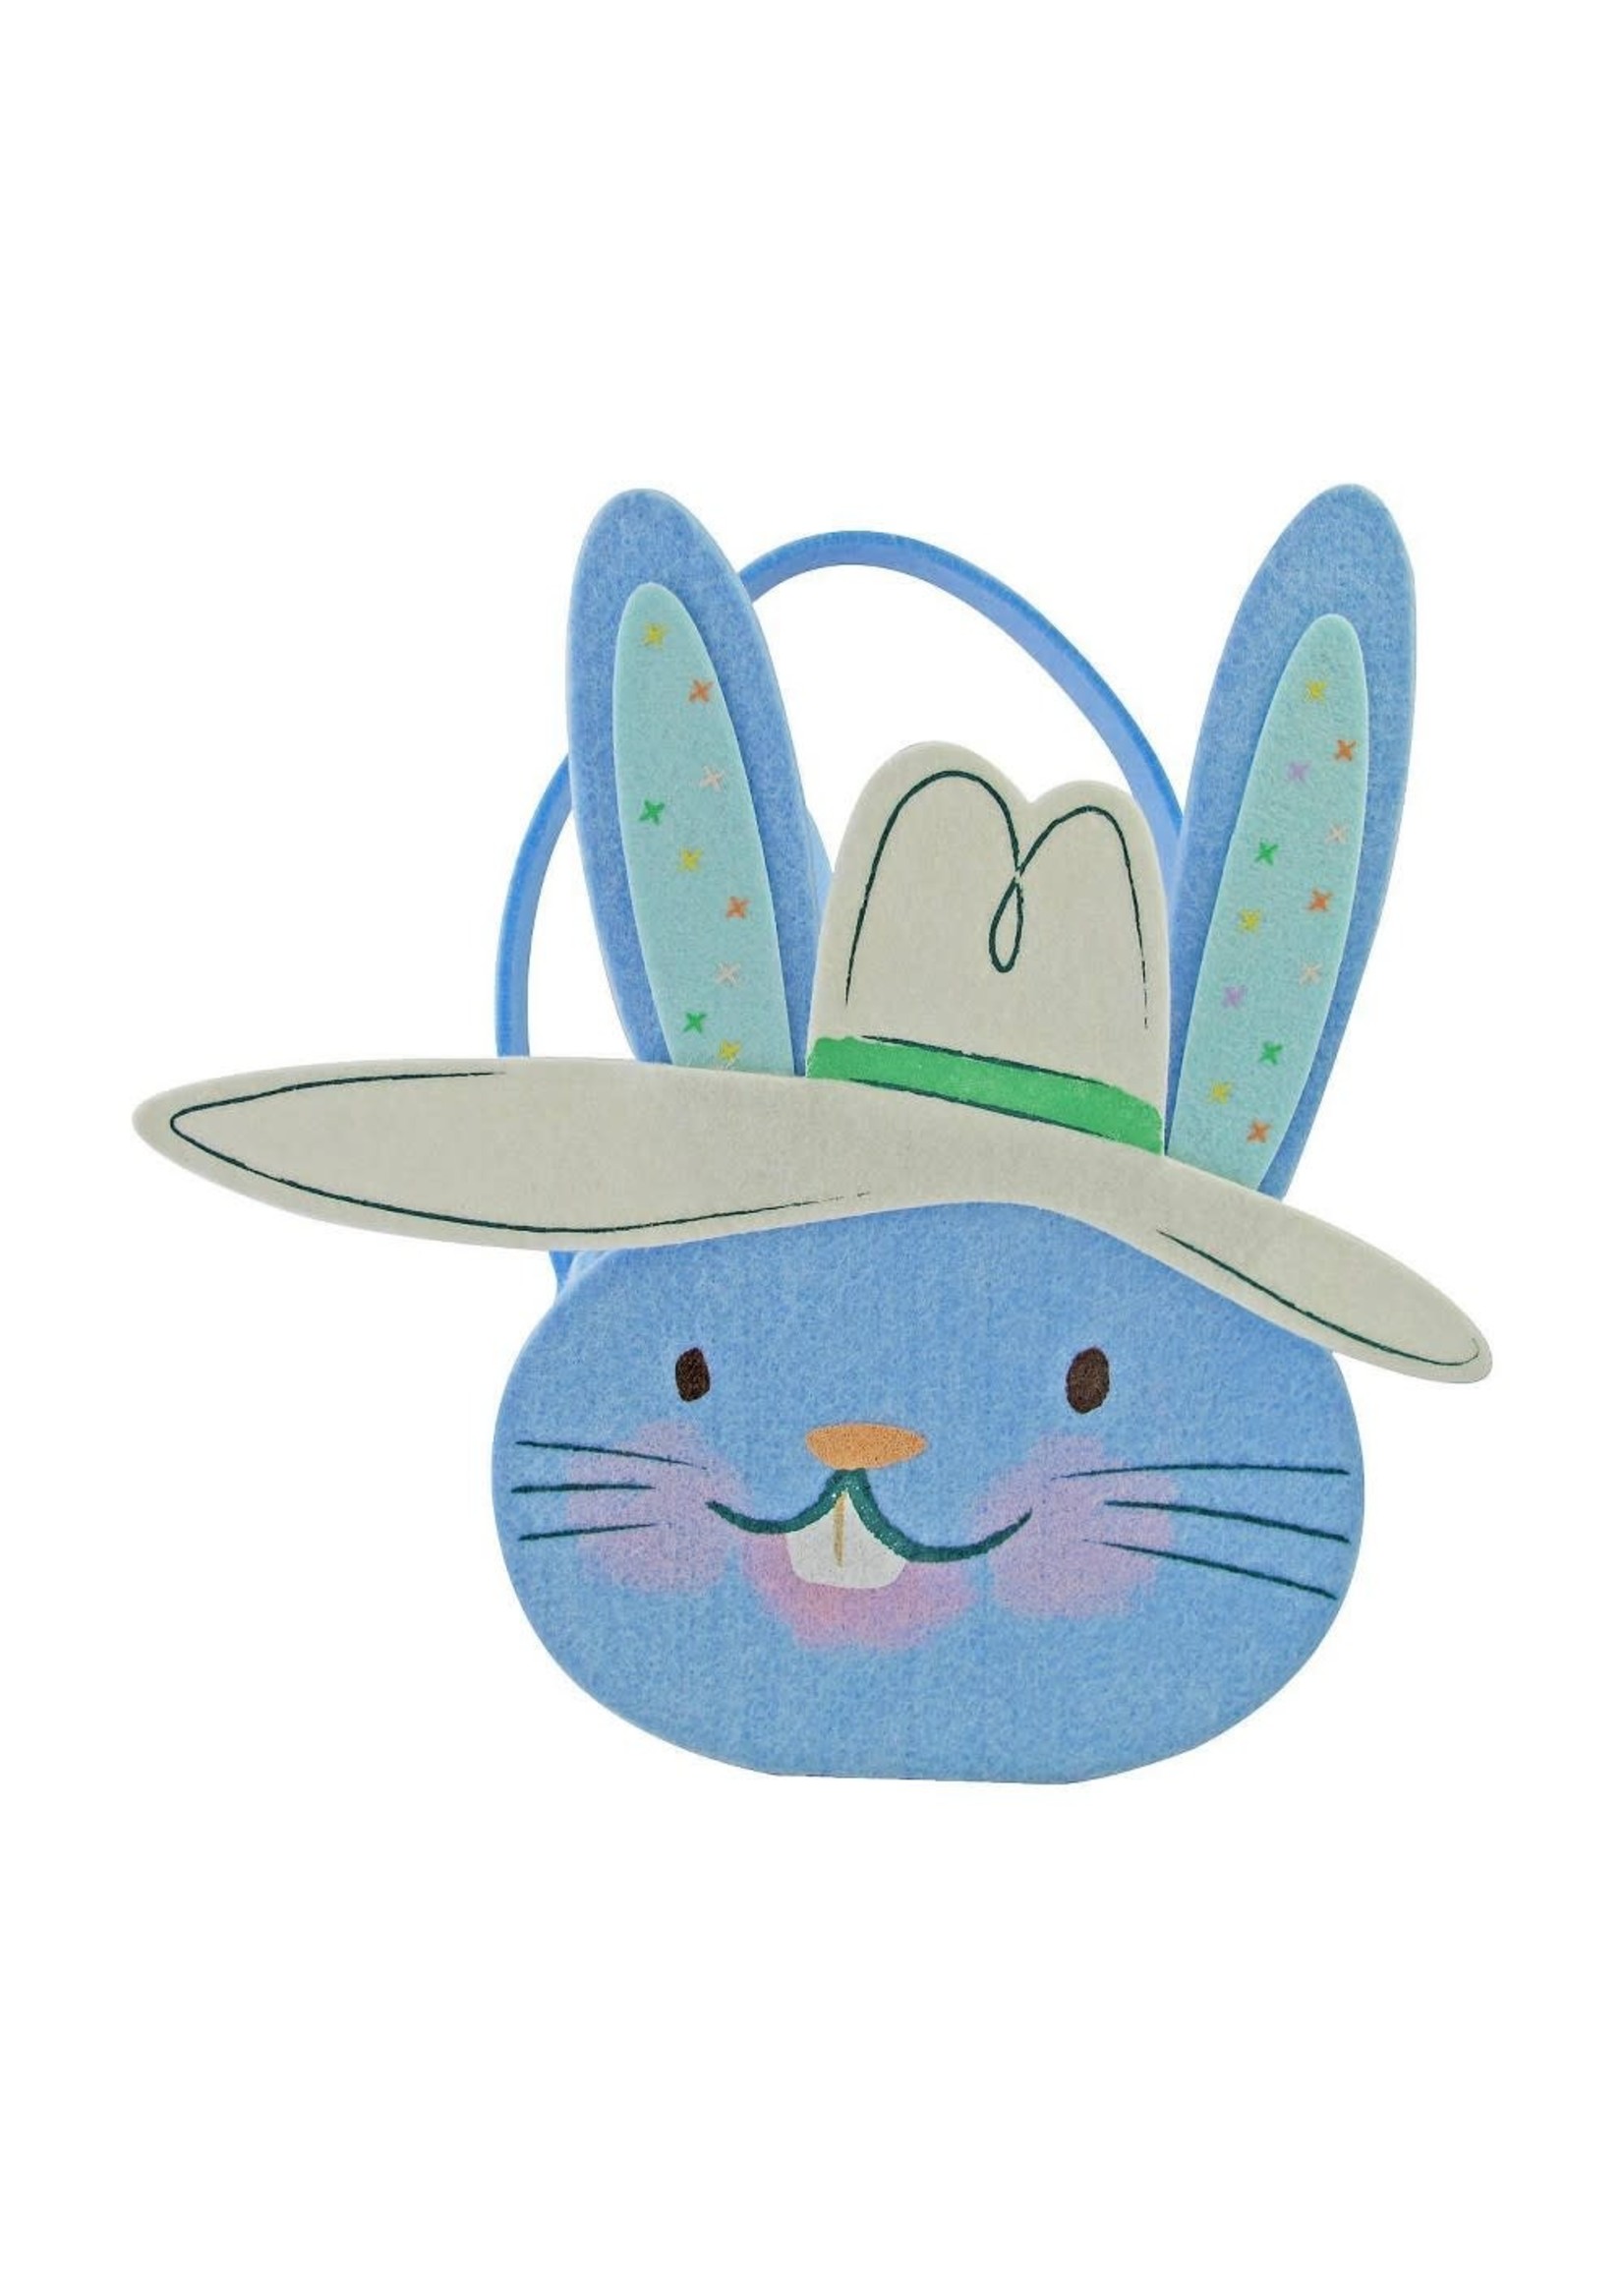 Felt Easter Basket Blue Bunny - Spritzâ„¢